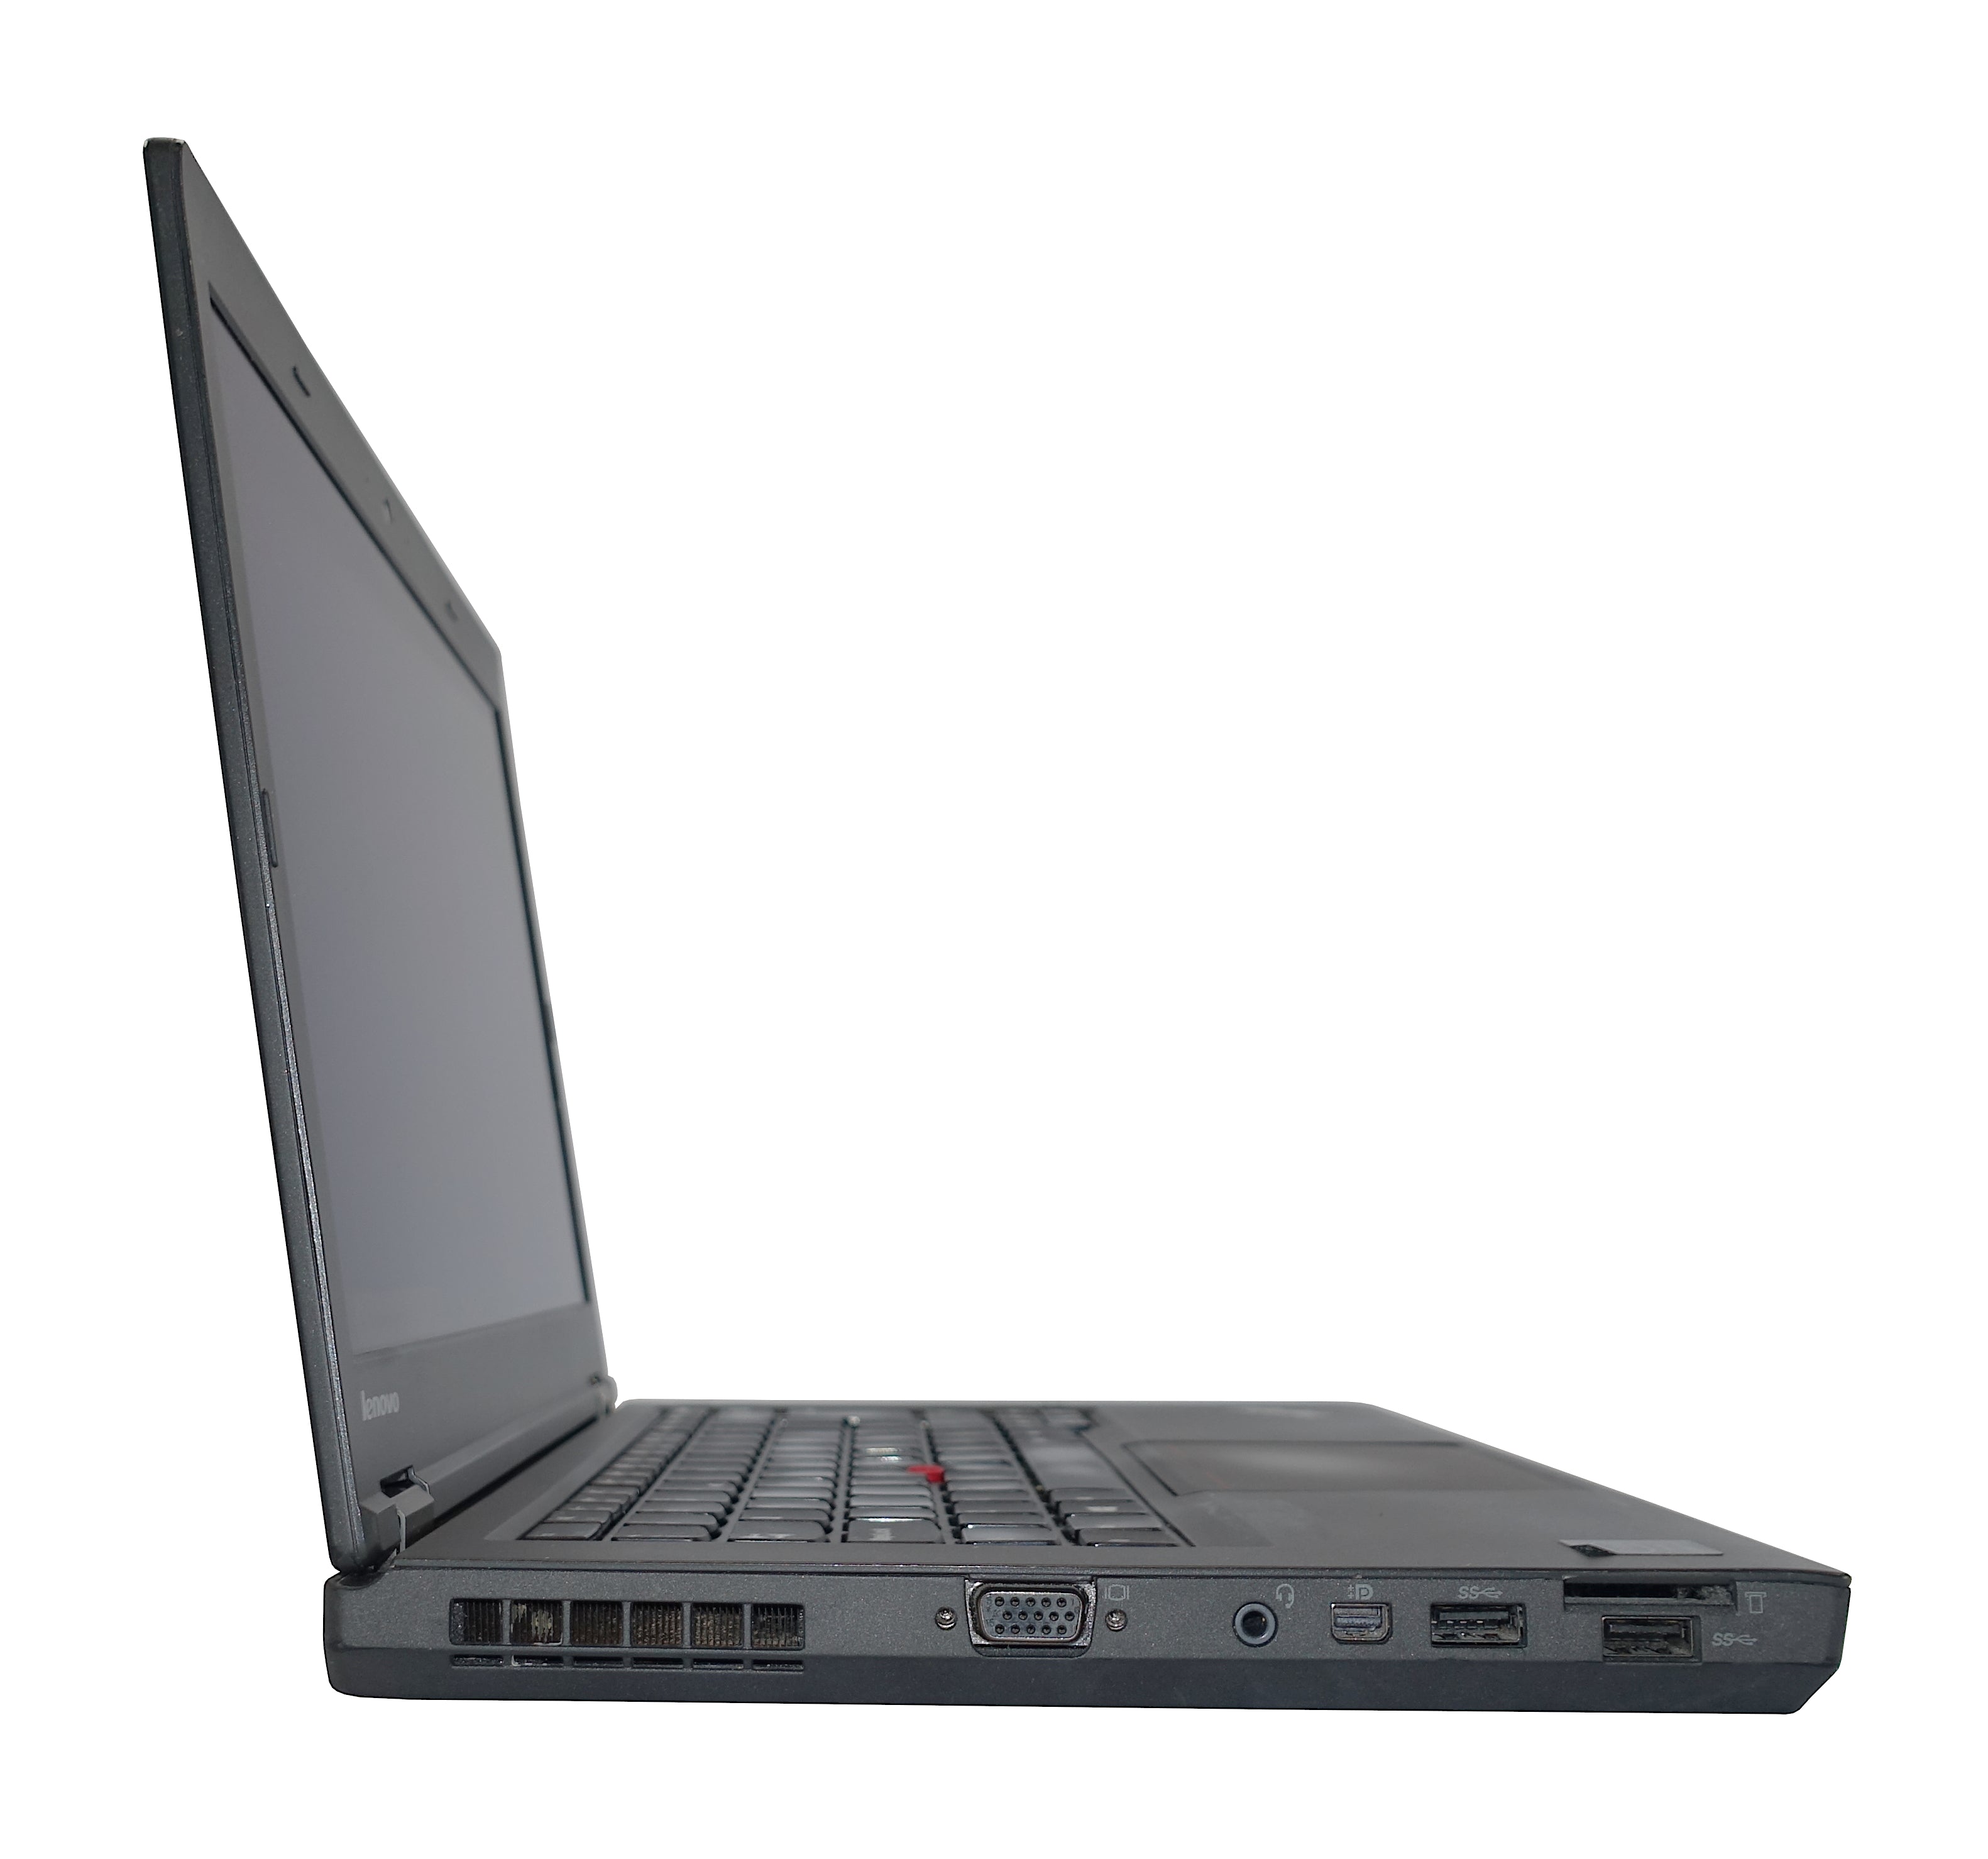 Lenovo ThinkPad L440 Laptop, 14" Core i5 4th Gen, 8GB RAM, 256GB SSD